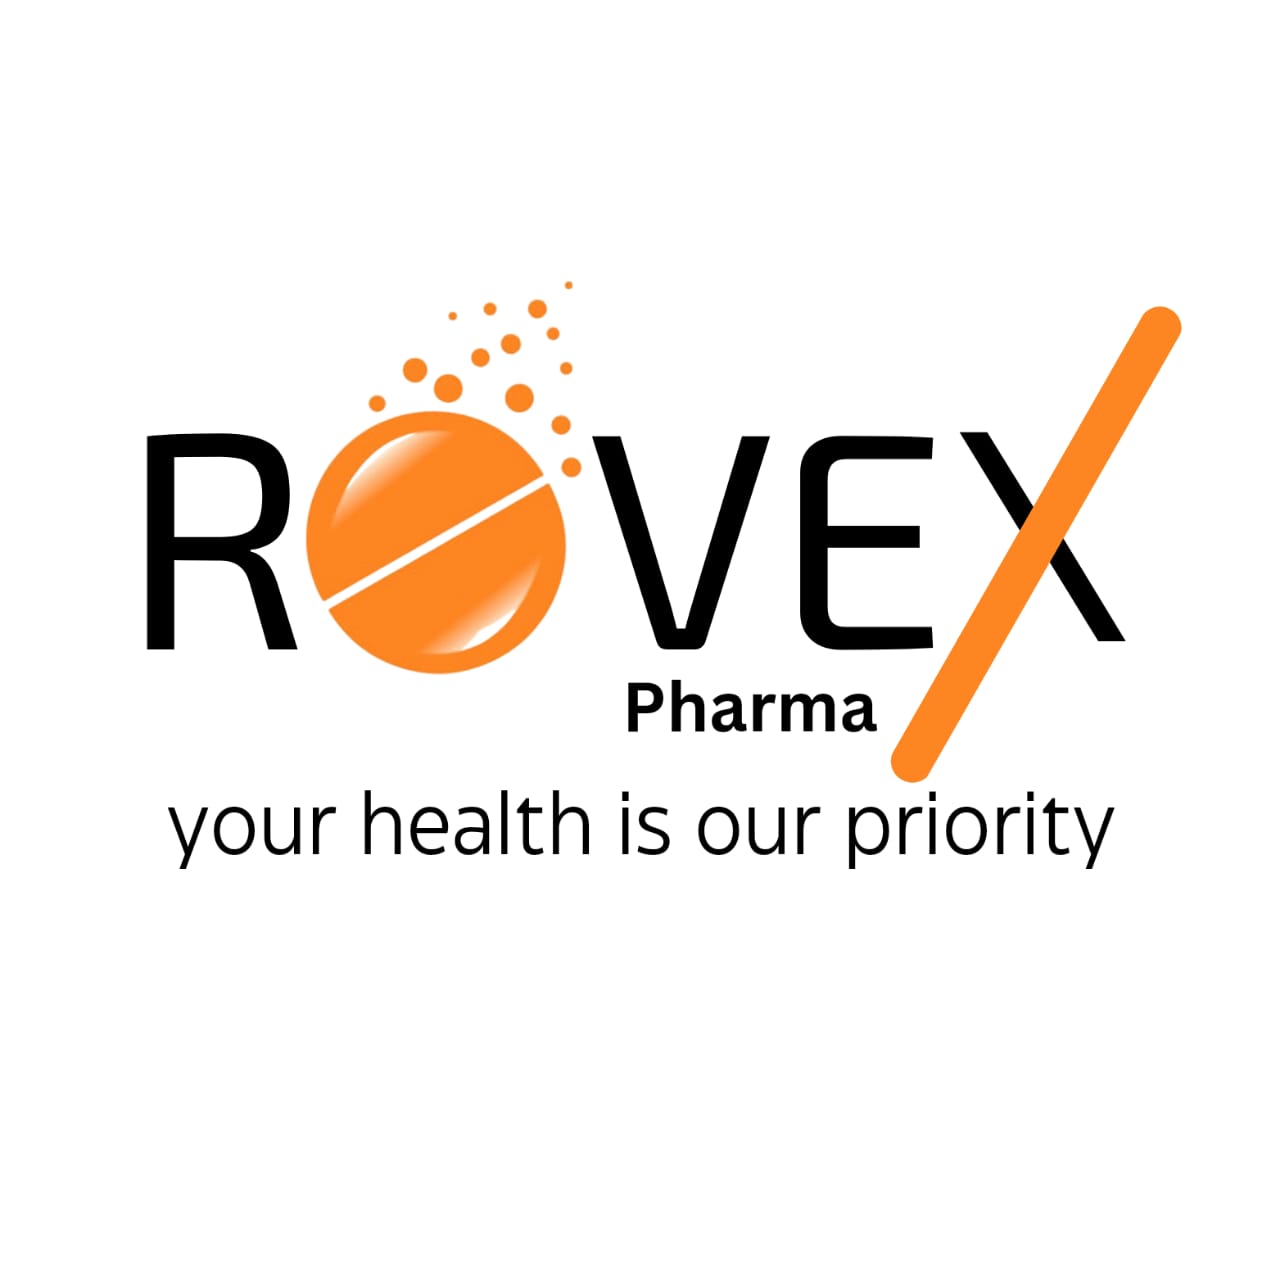 Rovex pharma